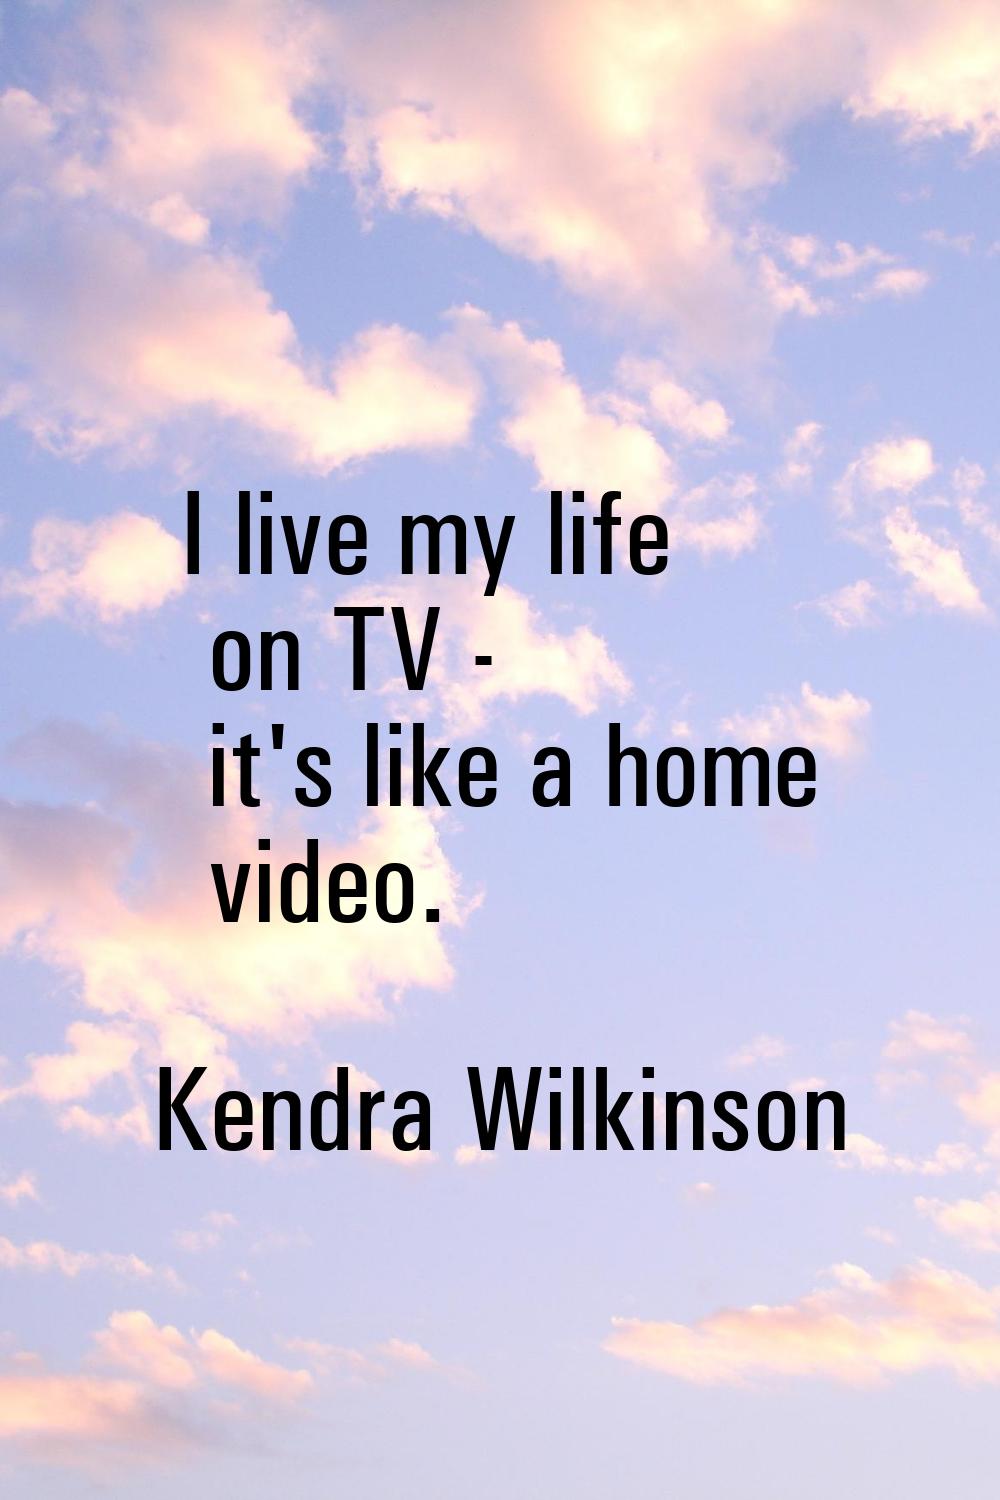 I live my life on TV - it's like a home video.